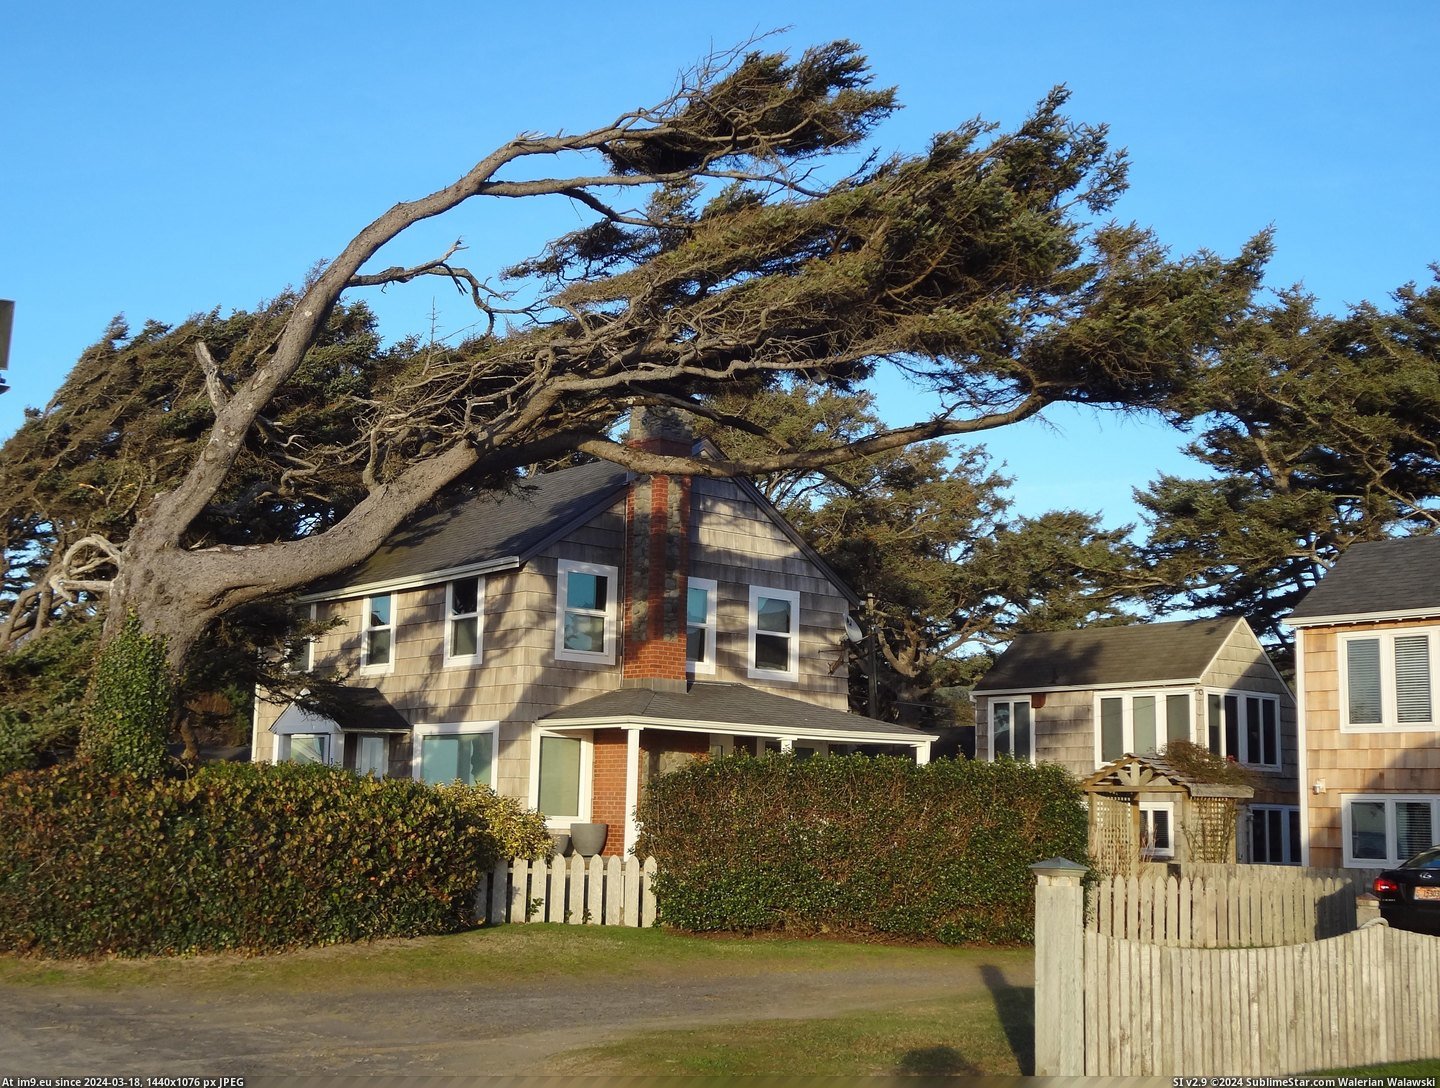 #Beach #Tree #Cannon #Winds #Constant #Oregon #Ocean #Shaped [Mildlyinteresting] Constant ocean winds have shaped this tree in Cannon Beach, Oregon. Pic. (Изображение из альбом My r/MILDLYINTERESTING favs))